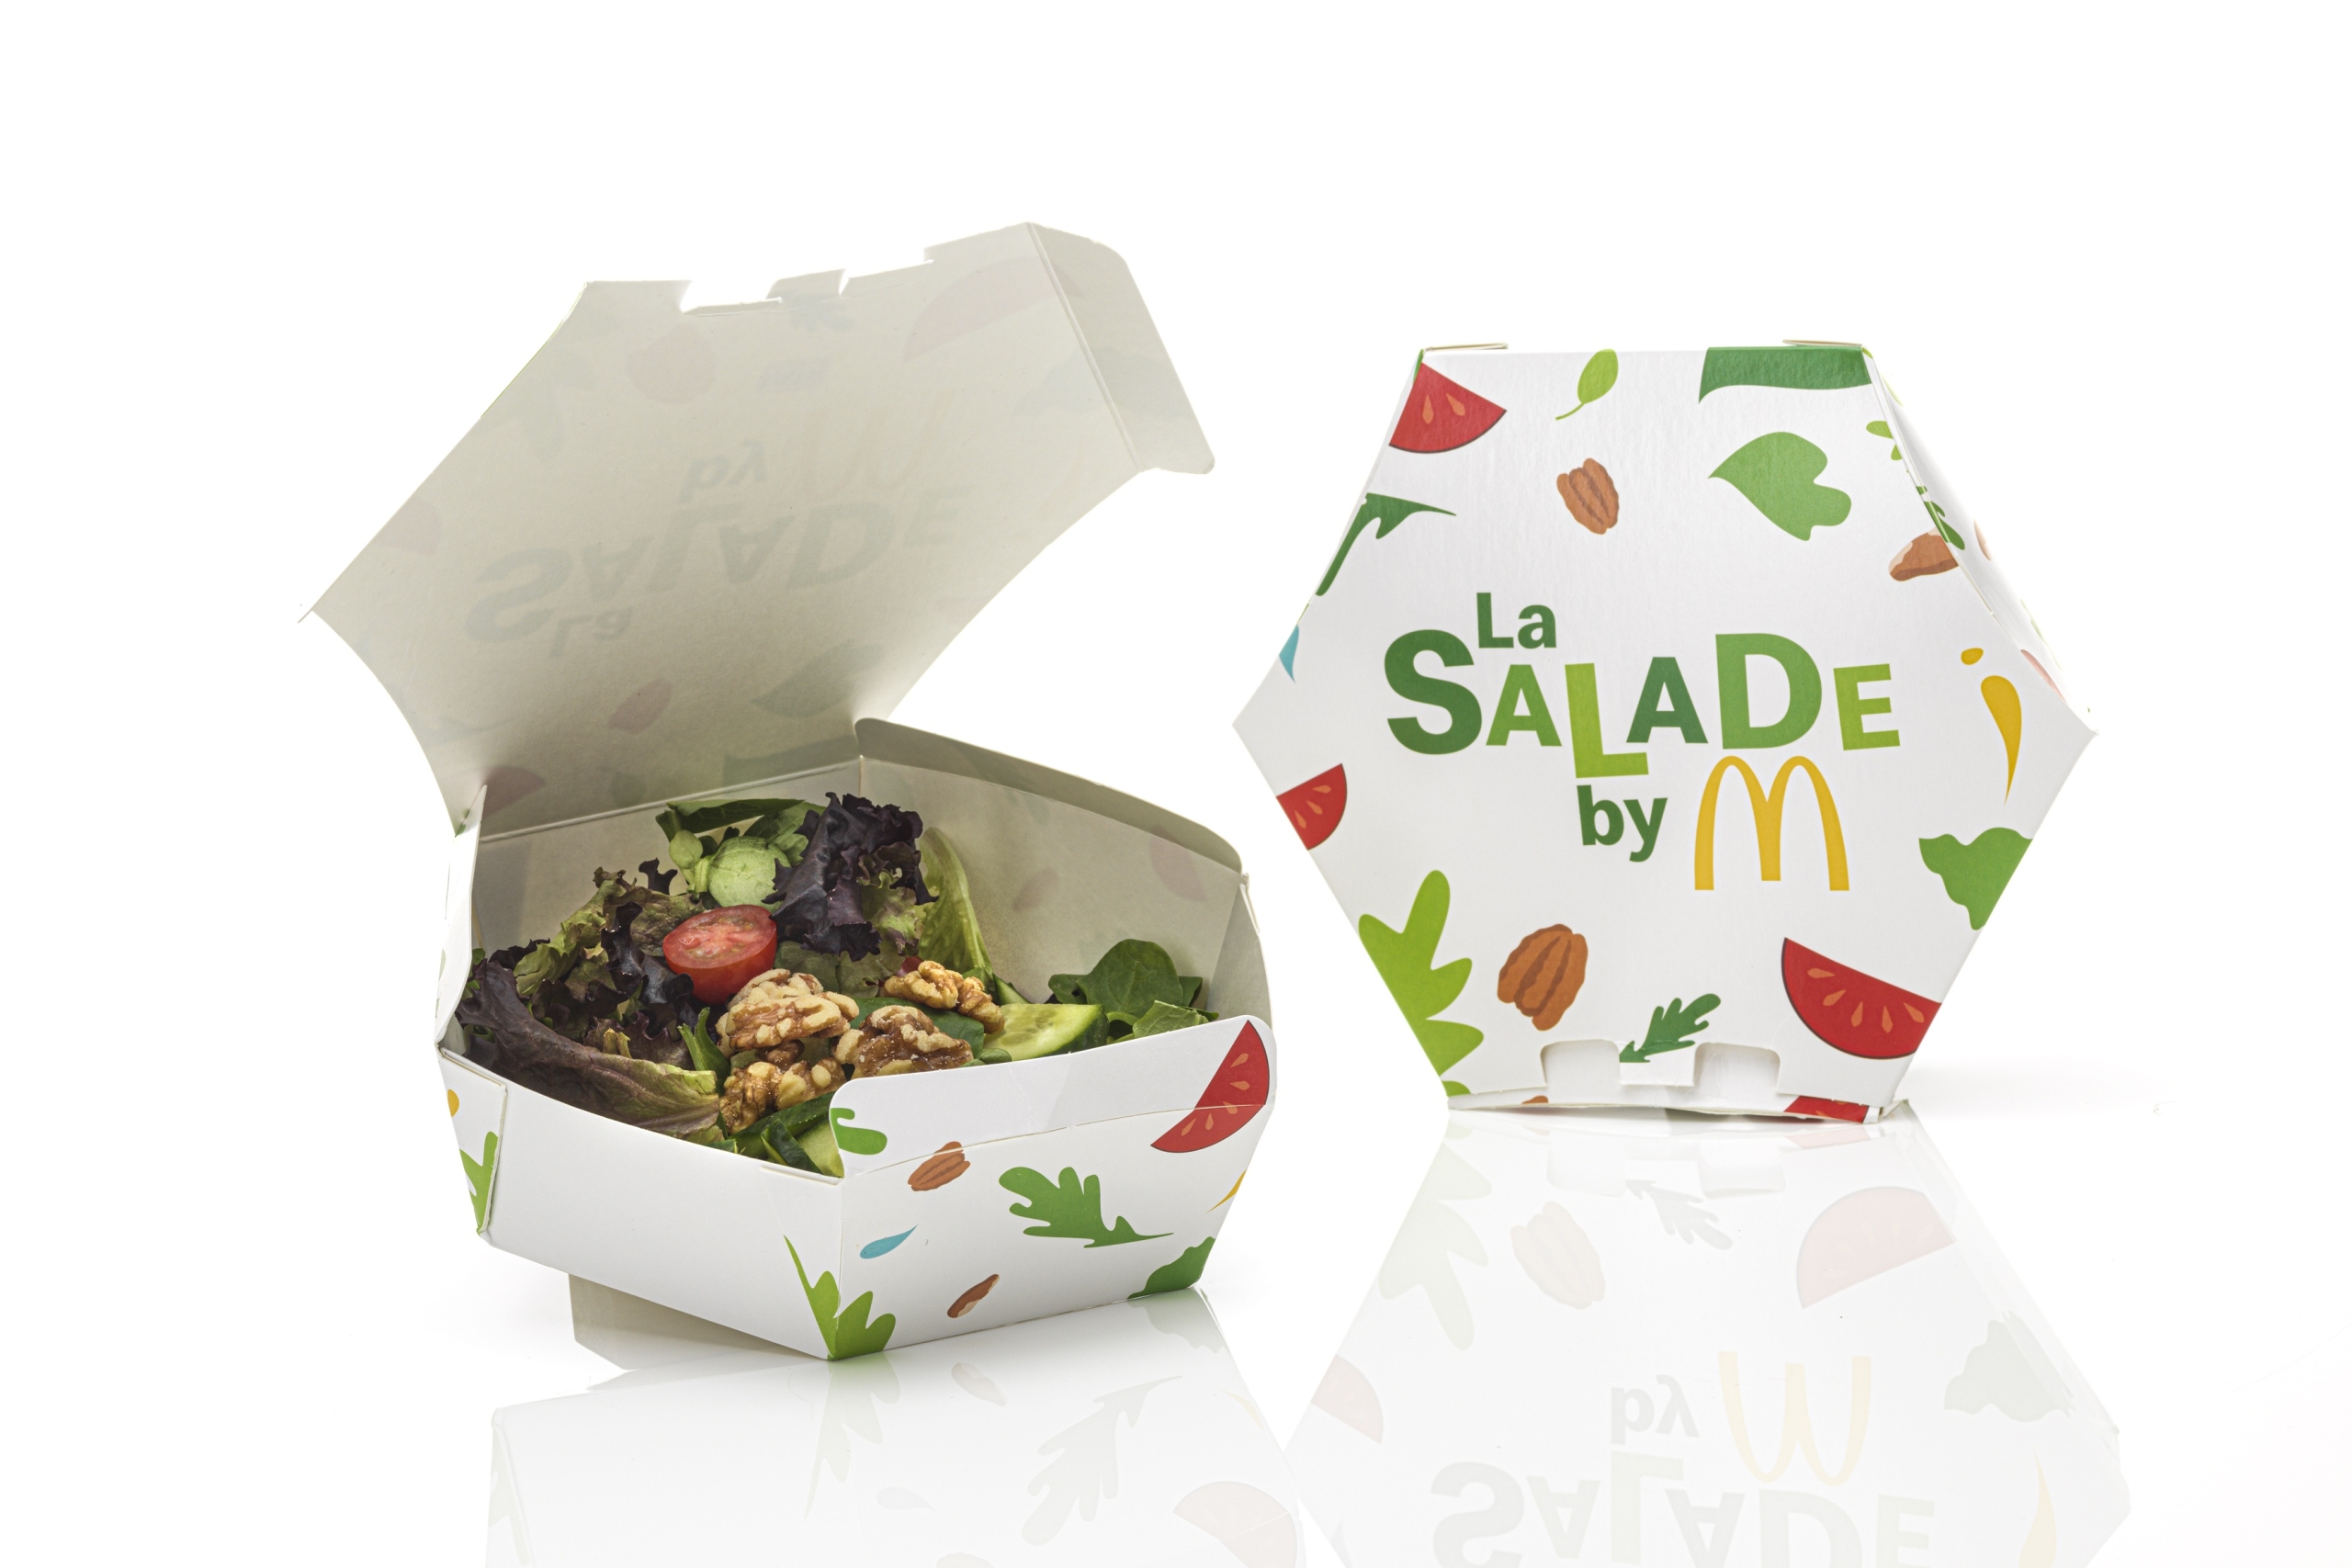 McDonald’s – Hexagonal clamshell salad box